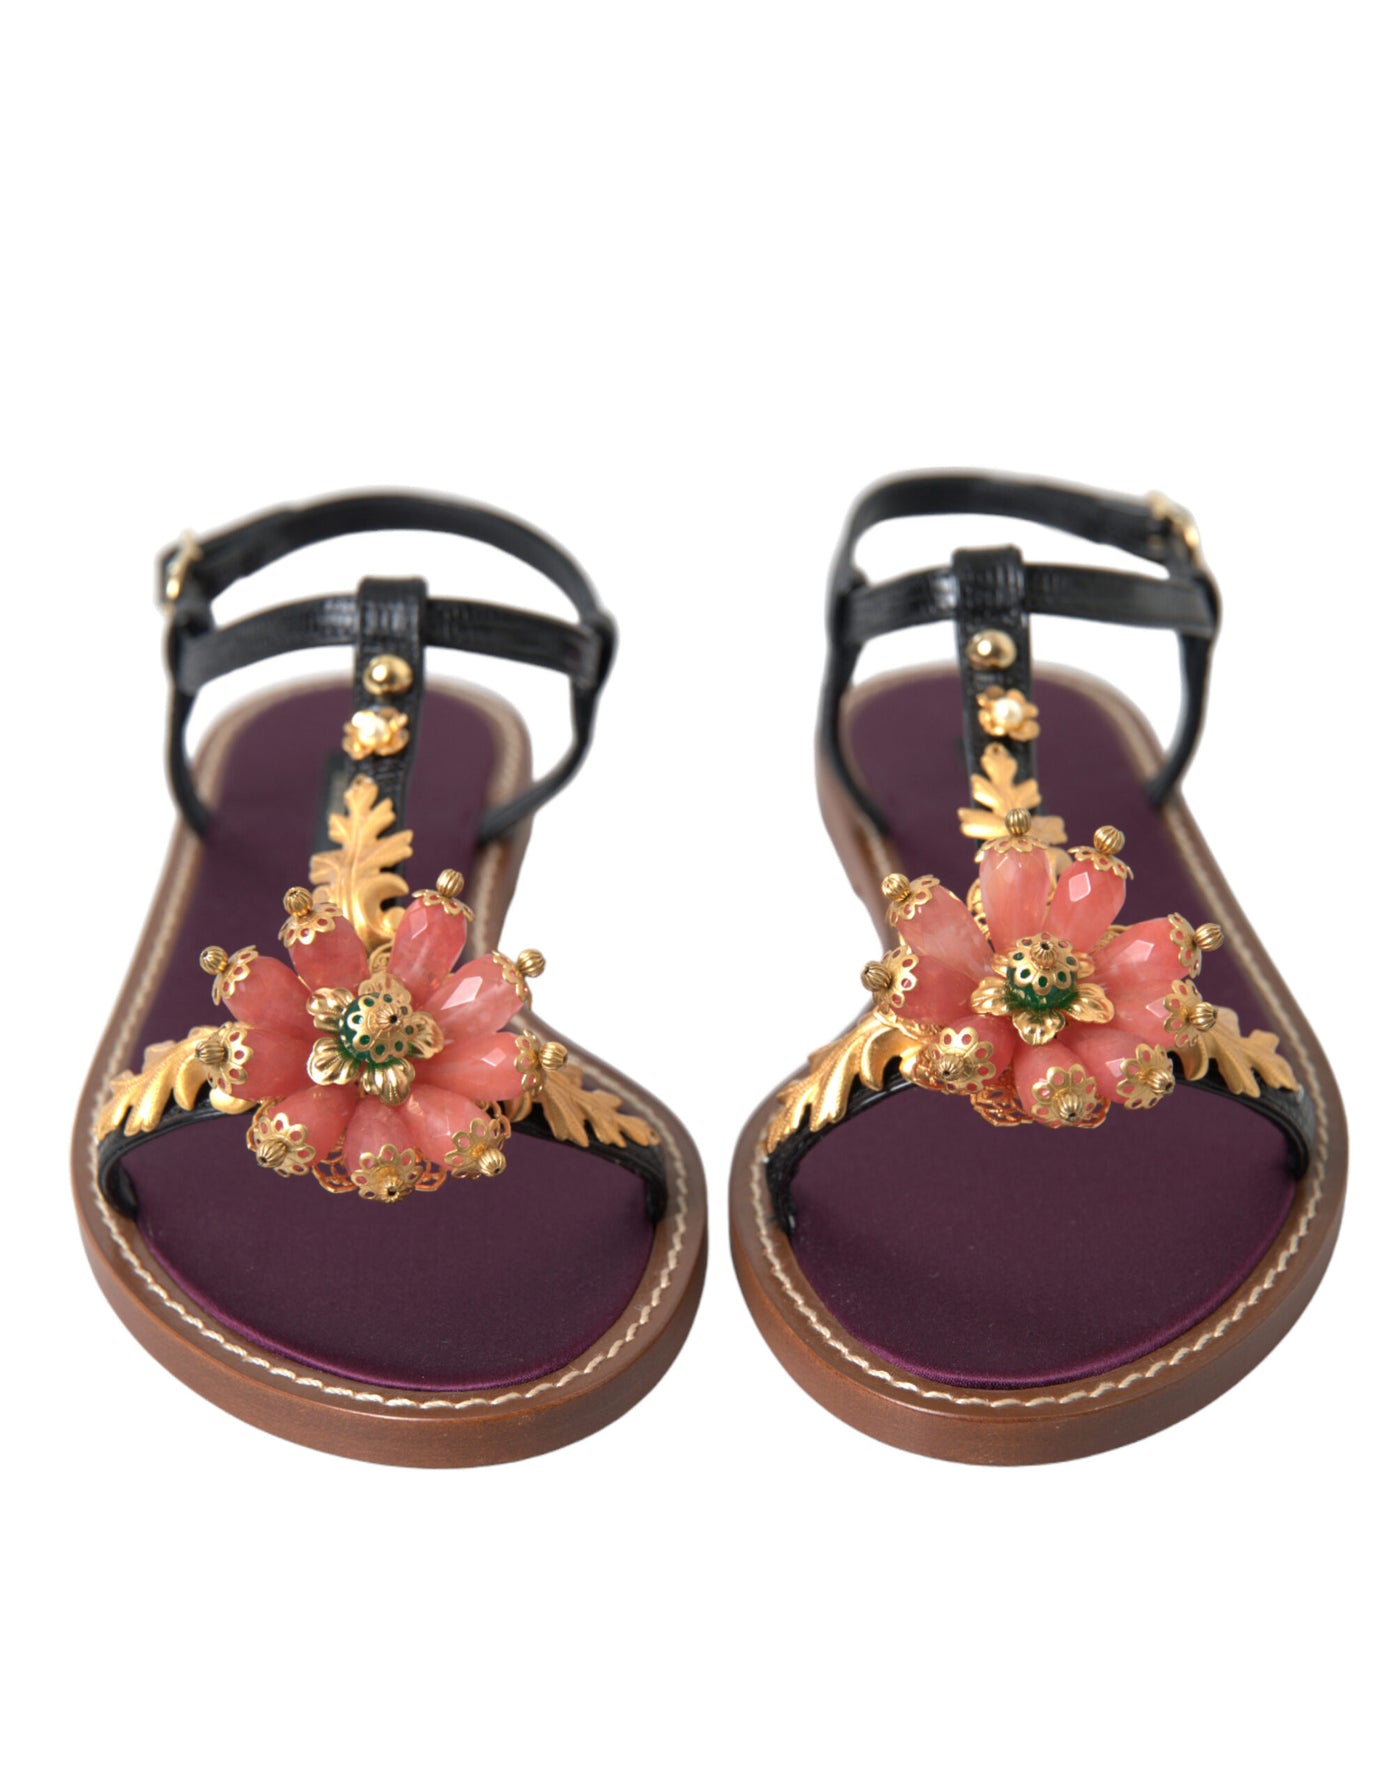 Dolce & Gabbana Black Crystal Gold Sandals Leather Shoes